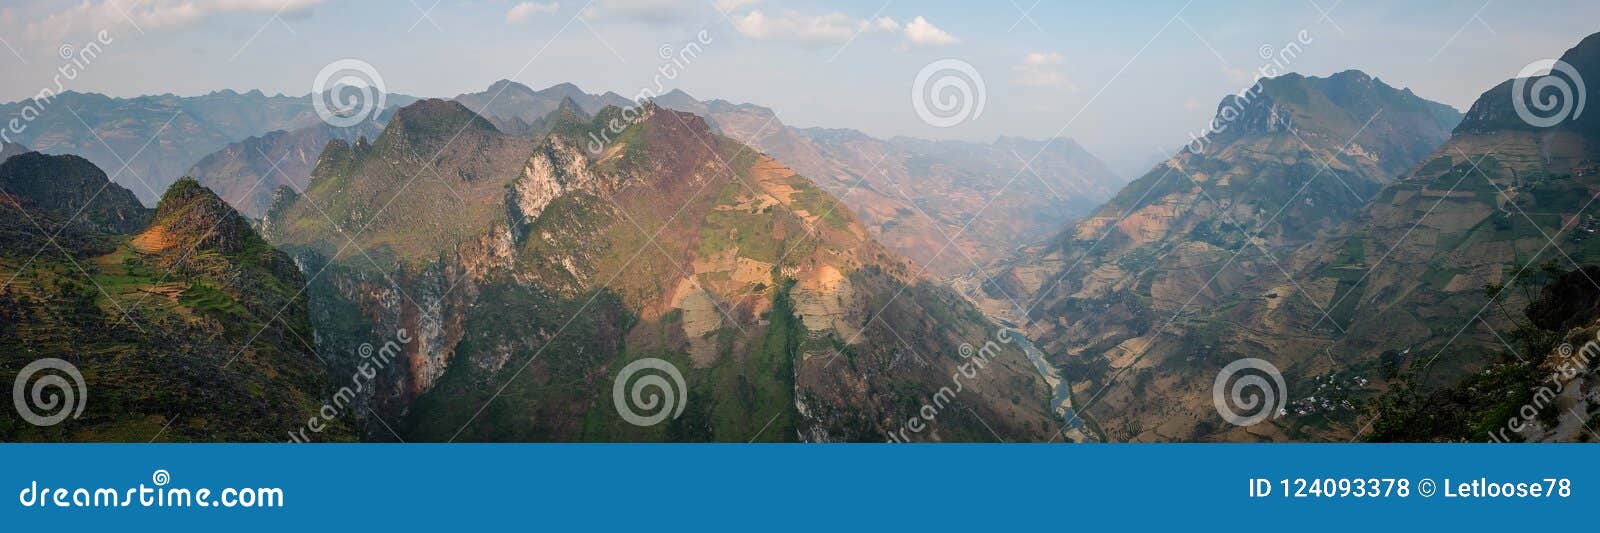 panorama of the majestic karst mountains around meo vac, ha giang province, vietnam